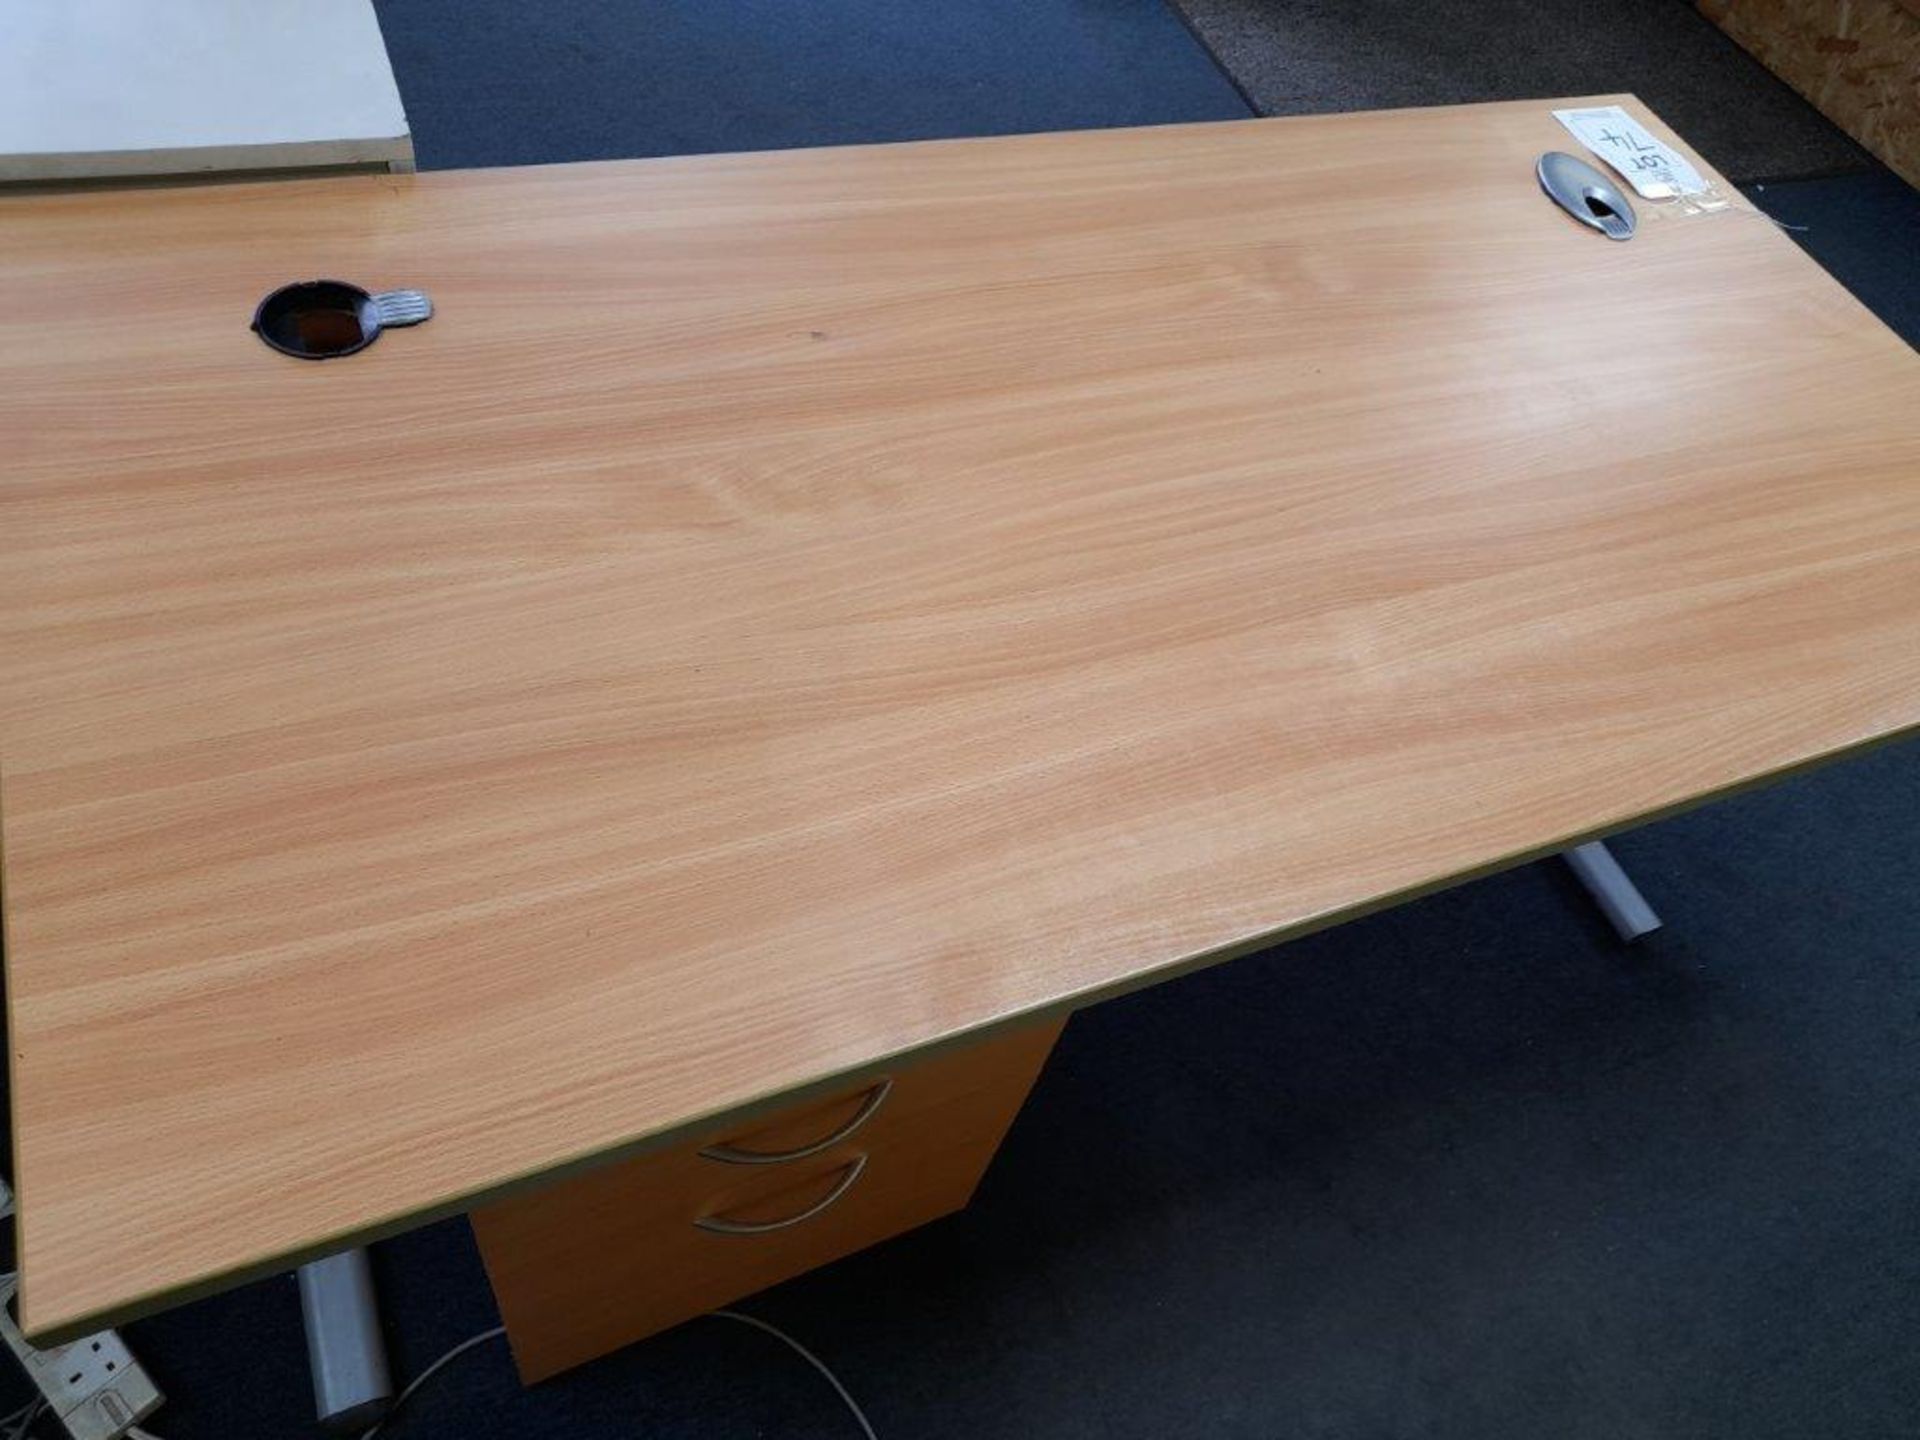 2 x light oak veneered desks each with pedestal unit, single divider screen and 2 x assorted - Image 2 of 2